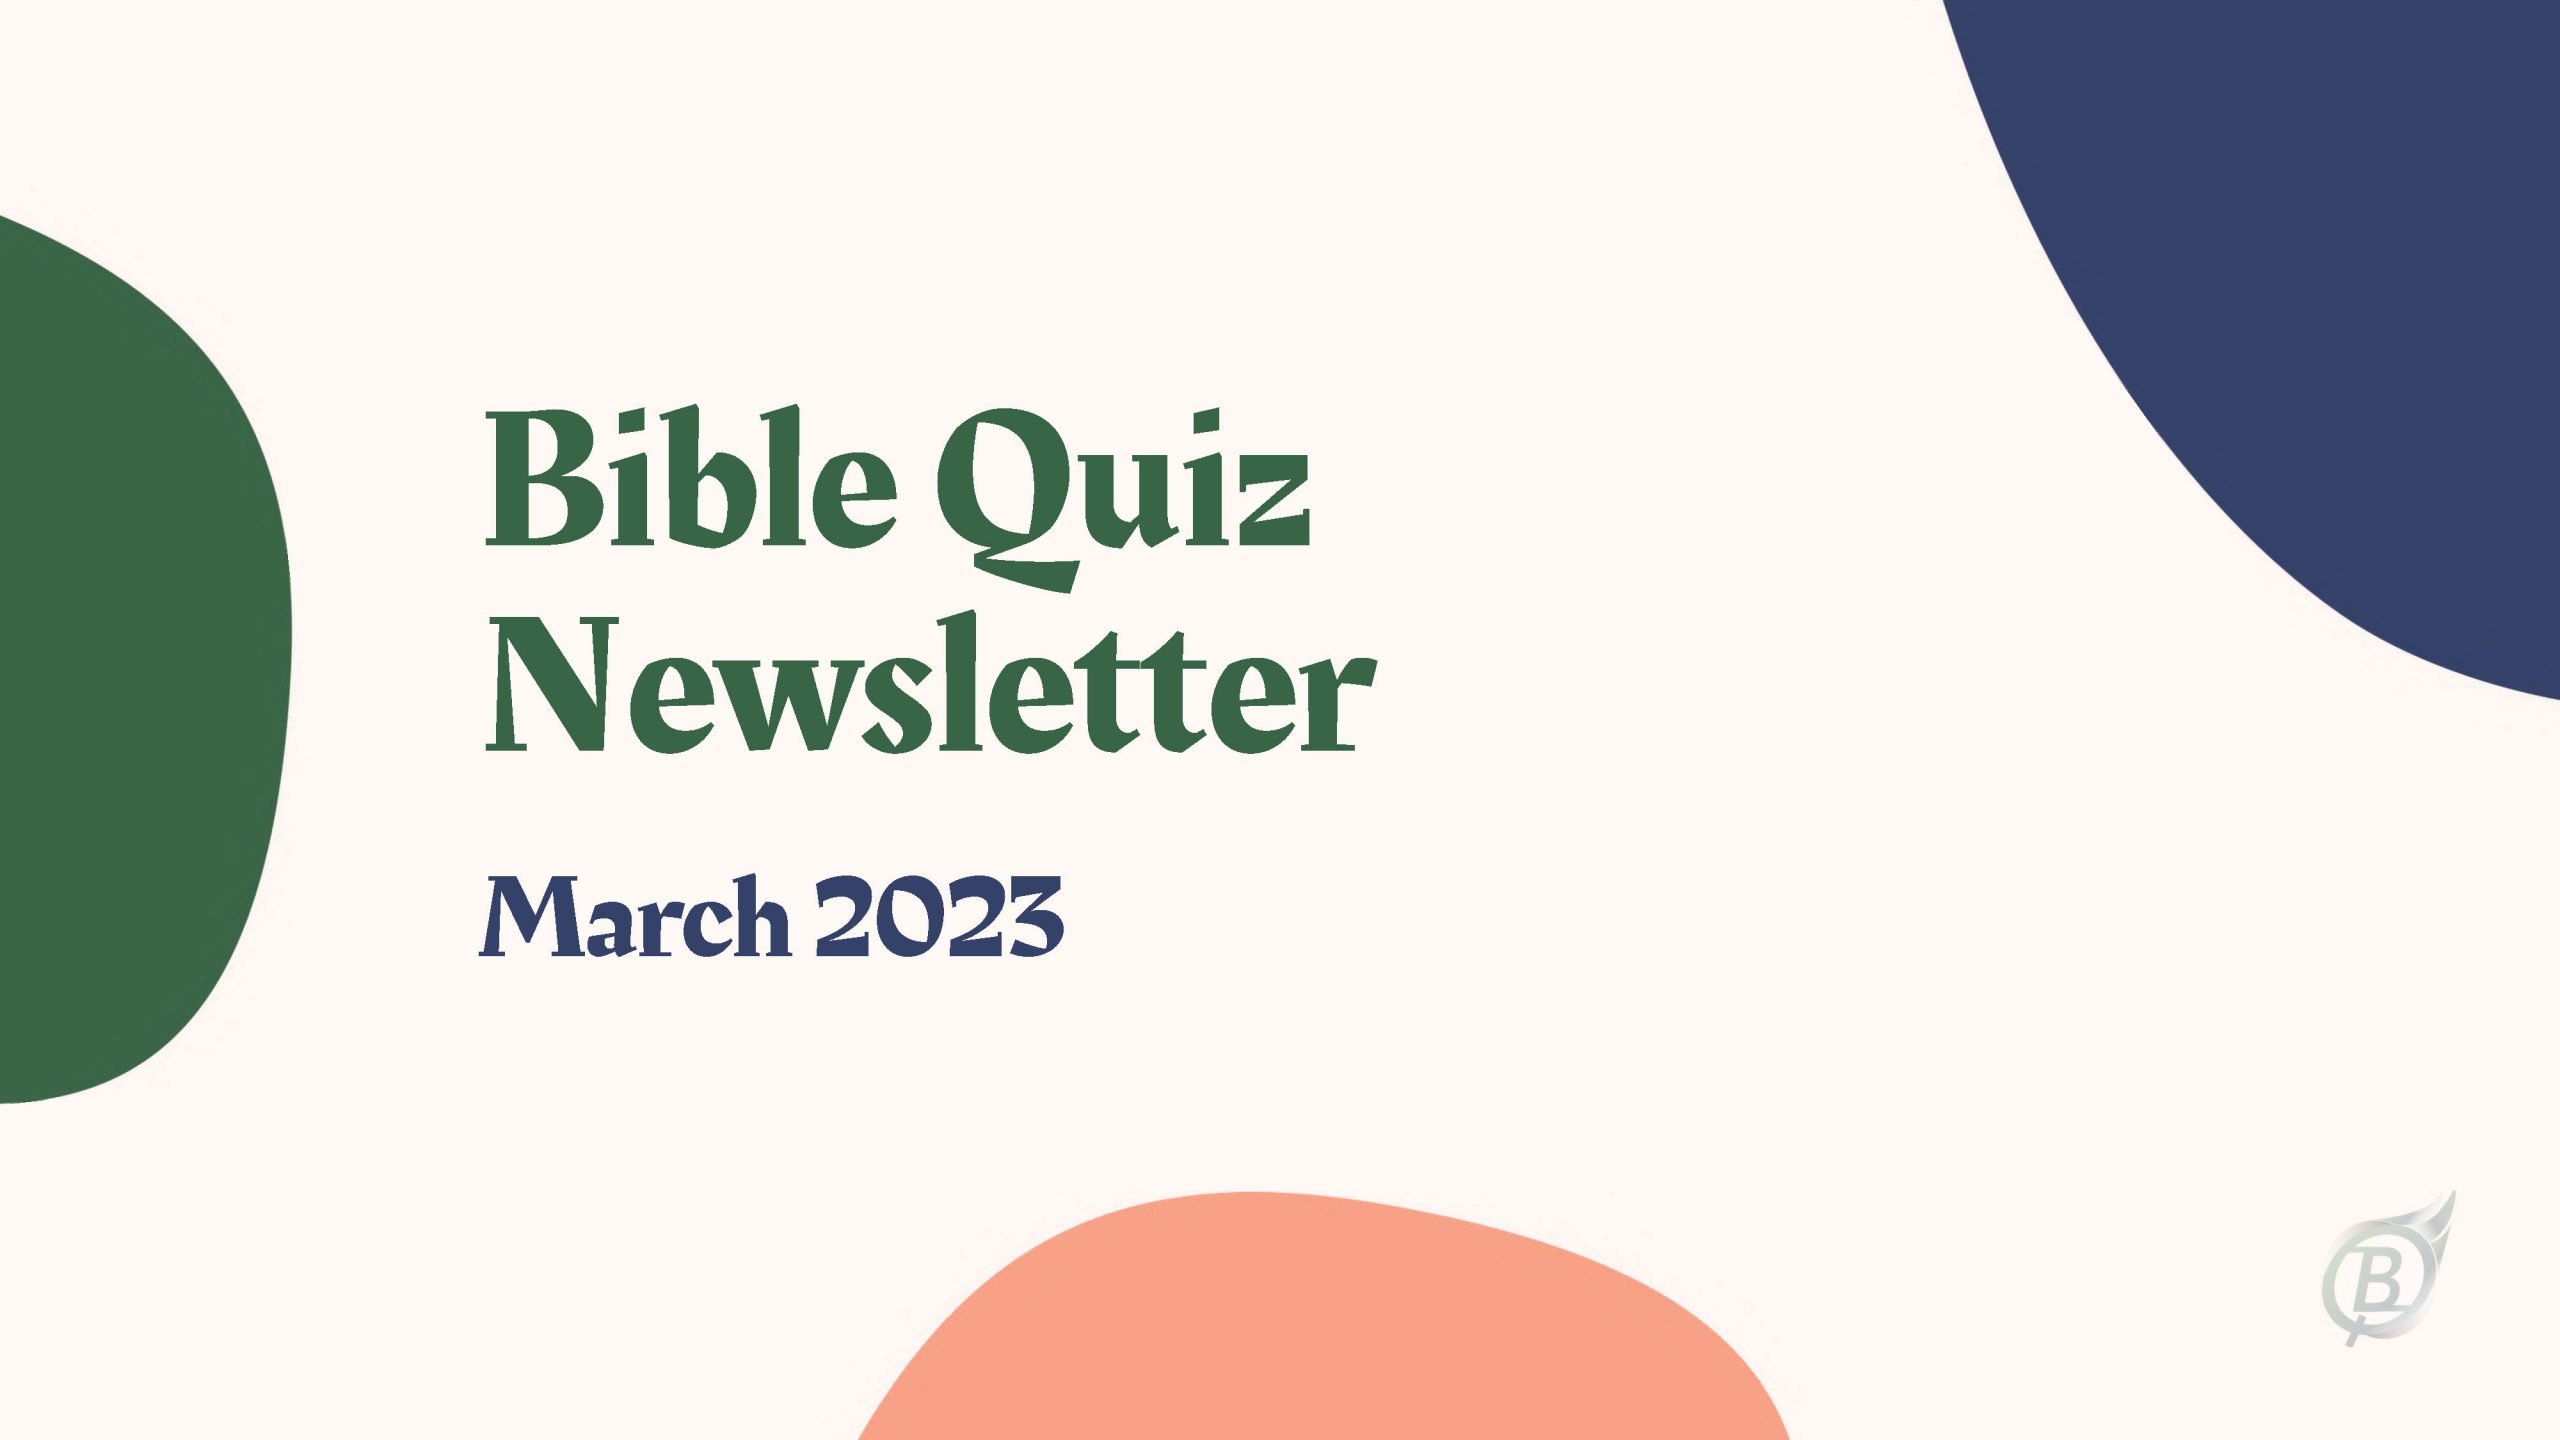 Bible Quiz Newsletter - March 2023